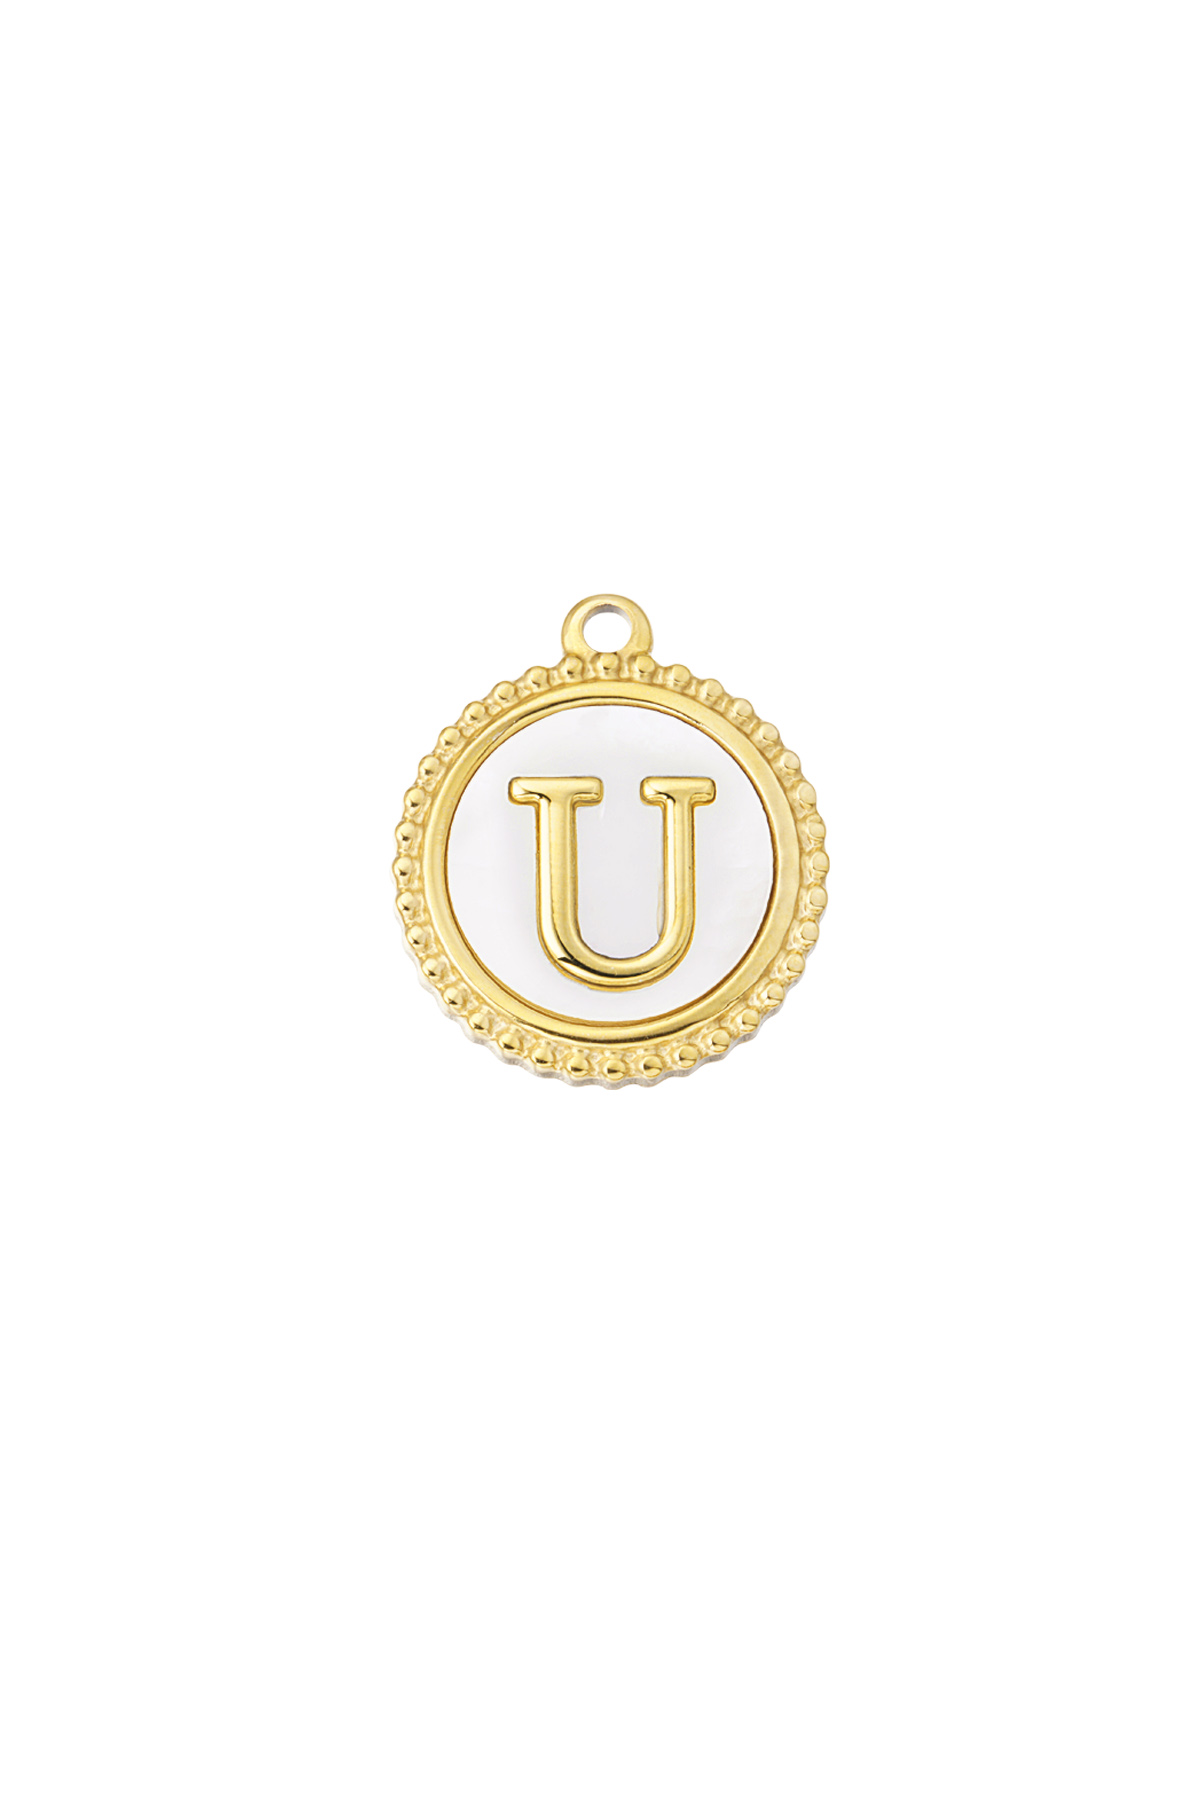 Oro / Charm agraciado U - oro/blanco Imagen18